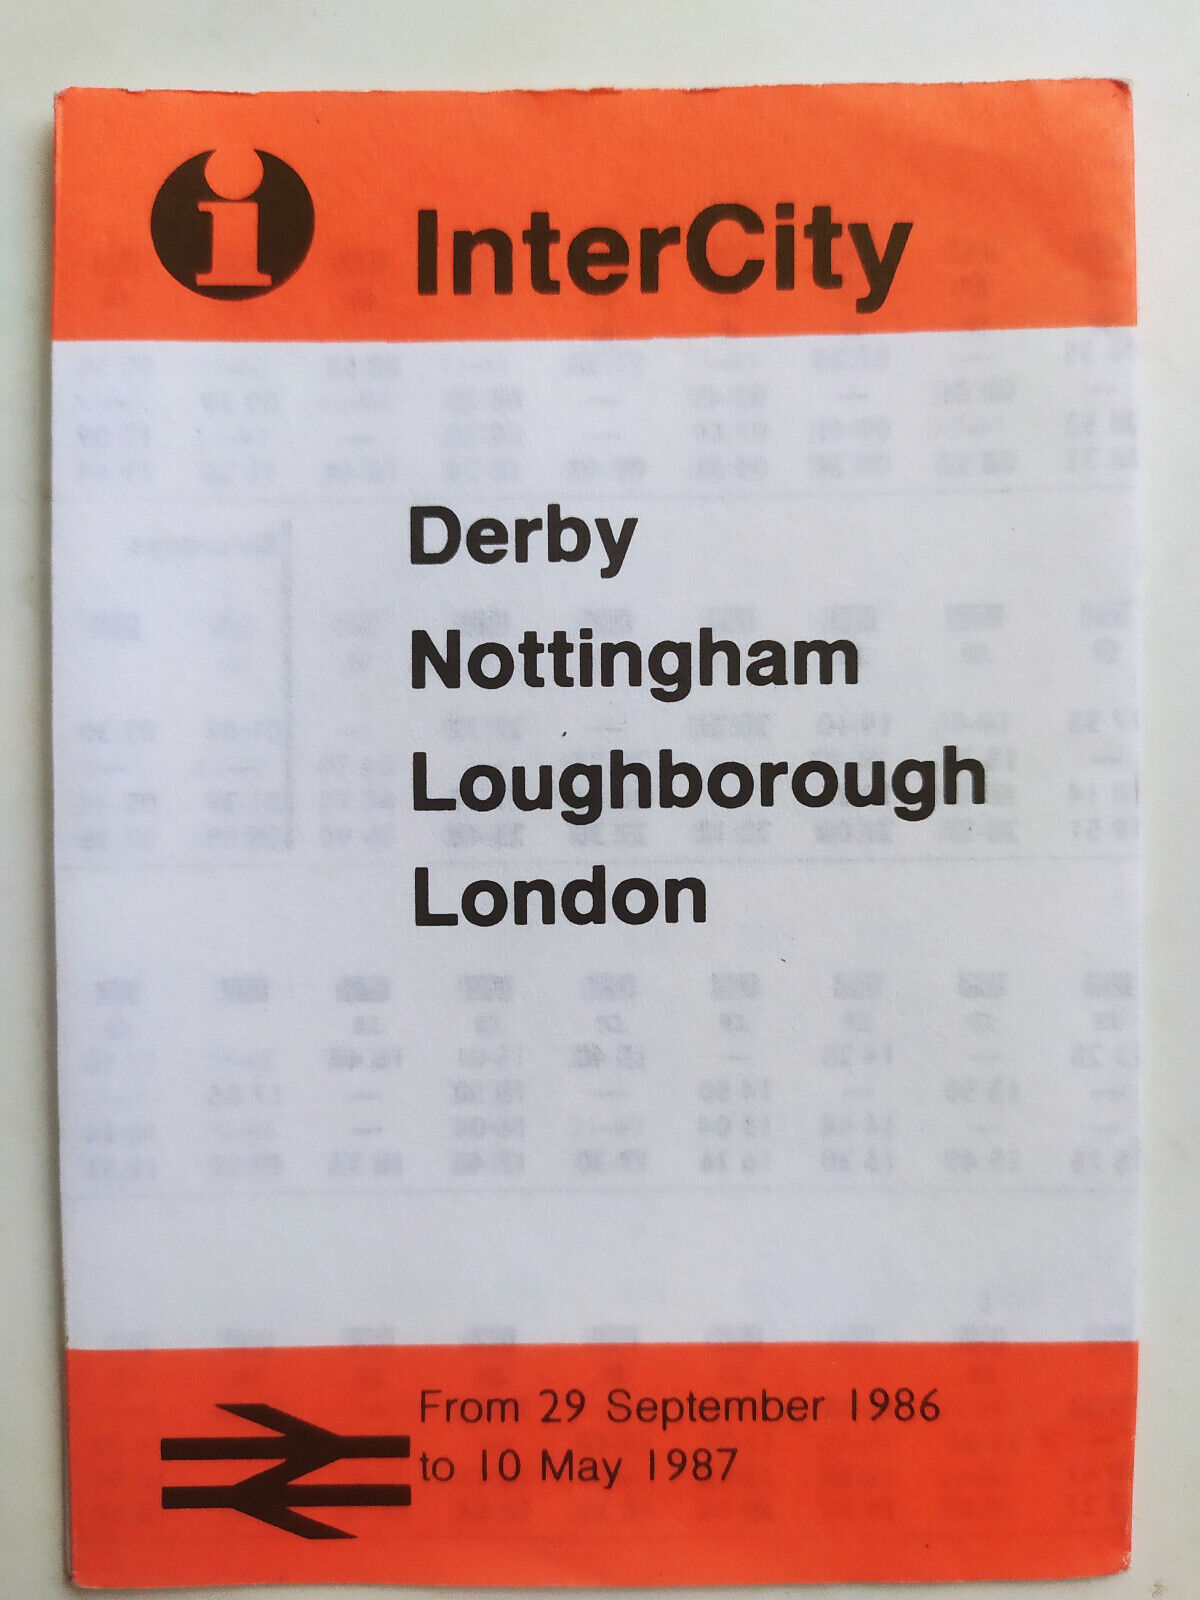 British Rail Pocket Timetable Intercity Derby Nottingham London September 1986